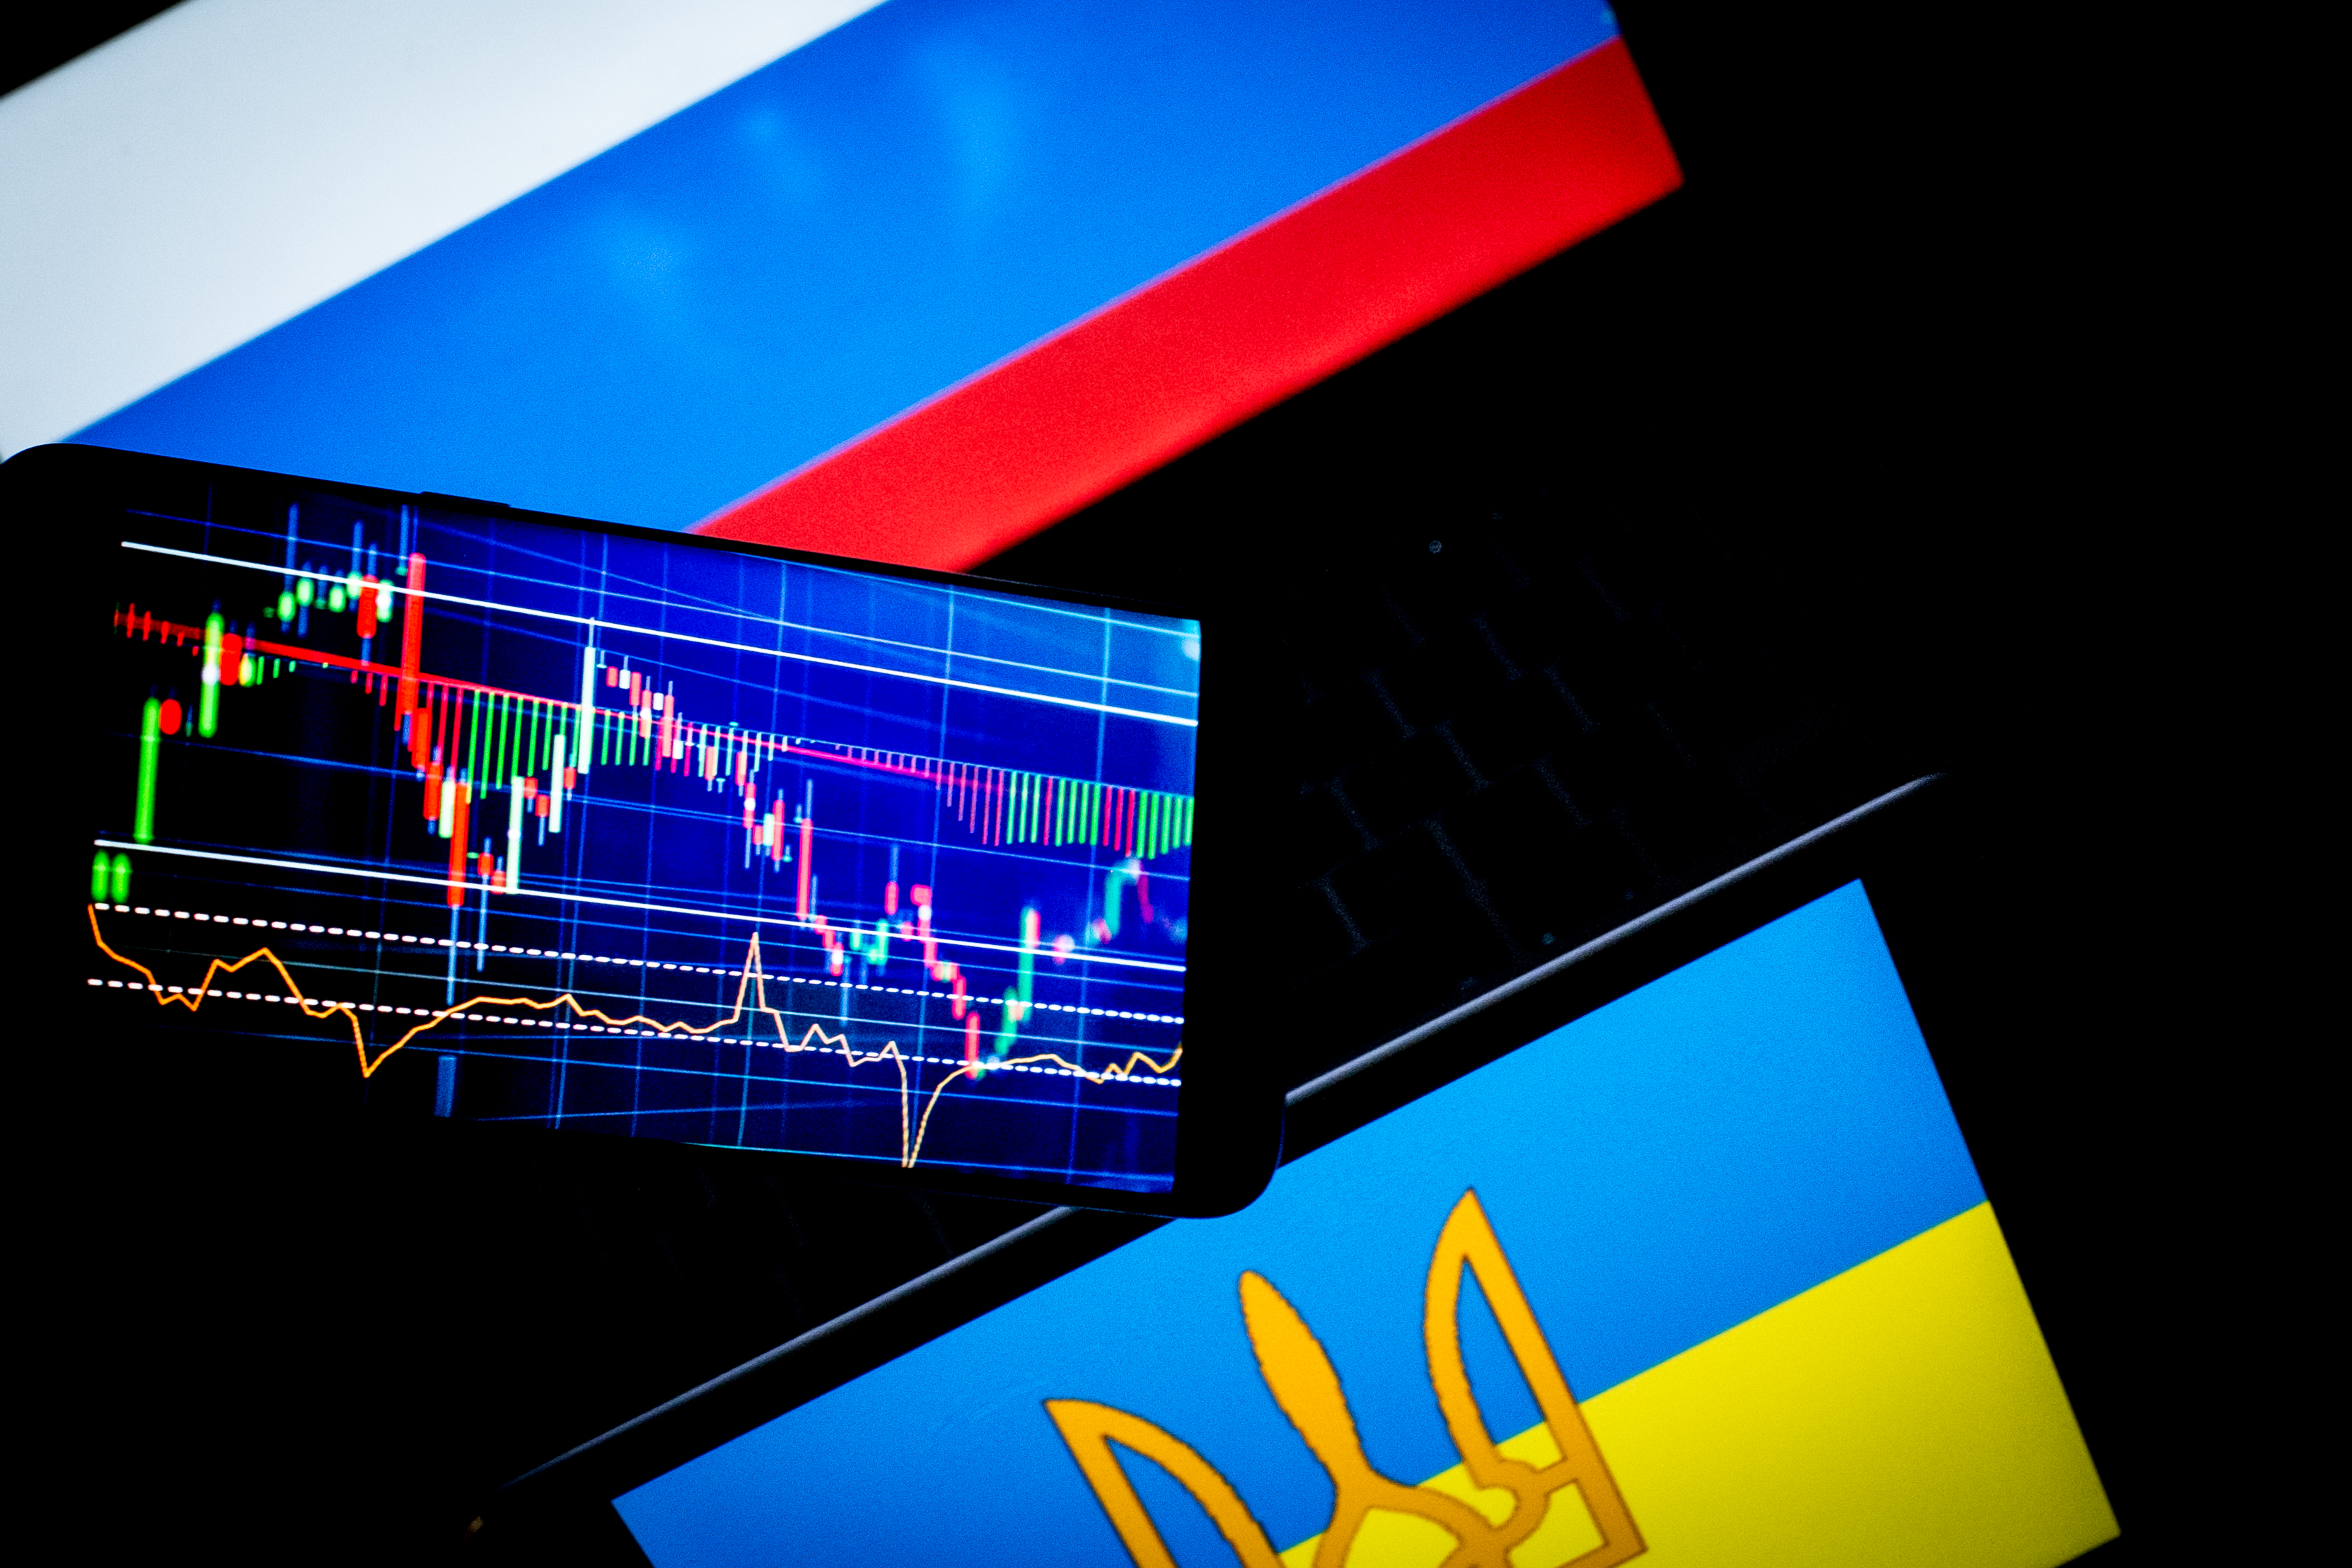 Russian stocks plummeted following the invasion of Ukraine.